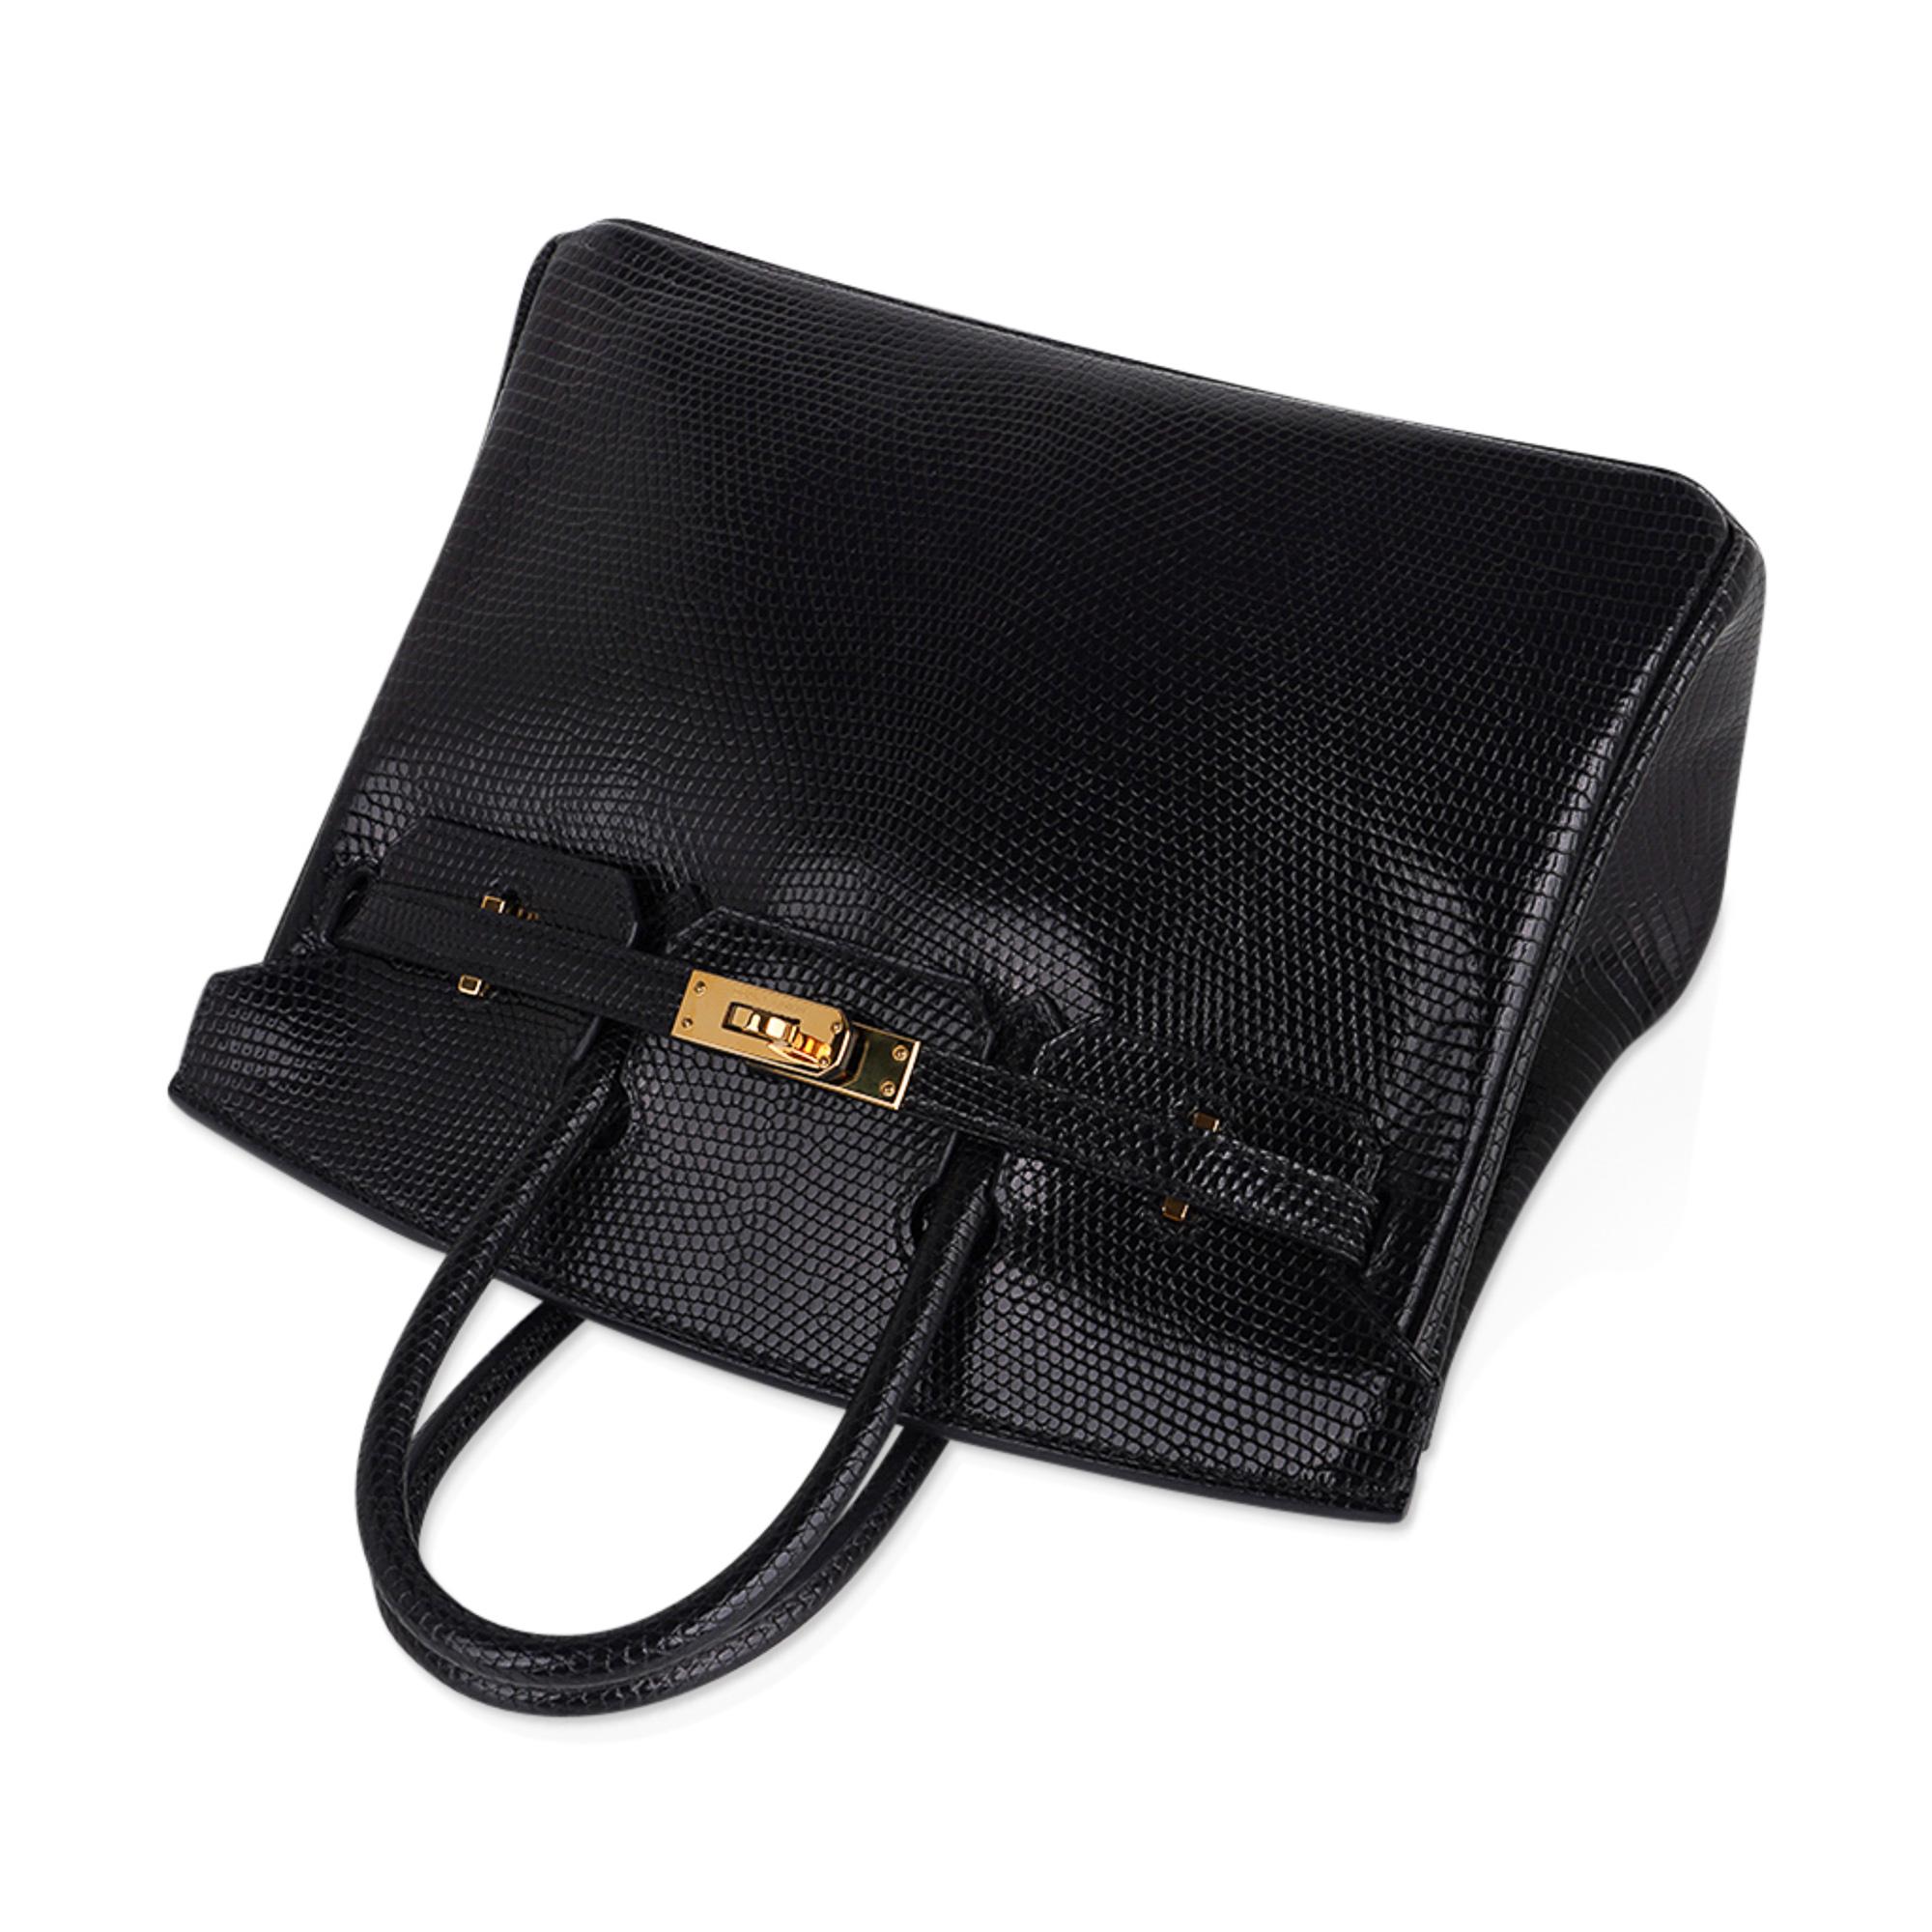 Women's Hermes Birkin 25 Bag Limited Edition Black Lizard Gold Hardware Very Rare